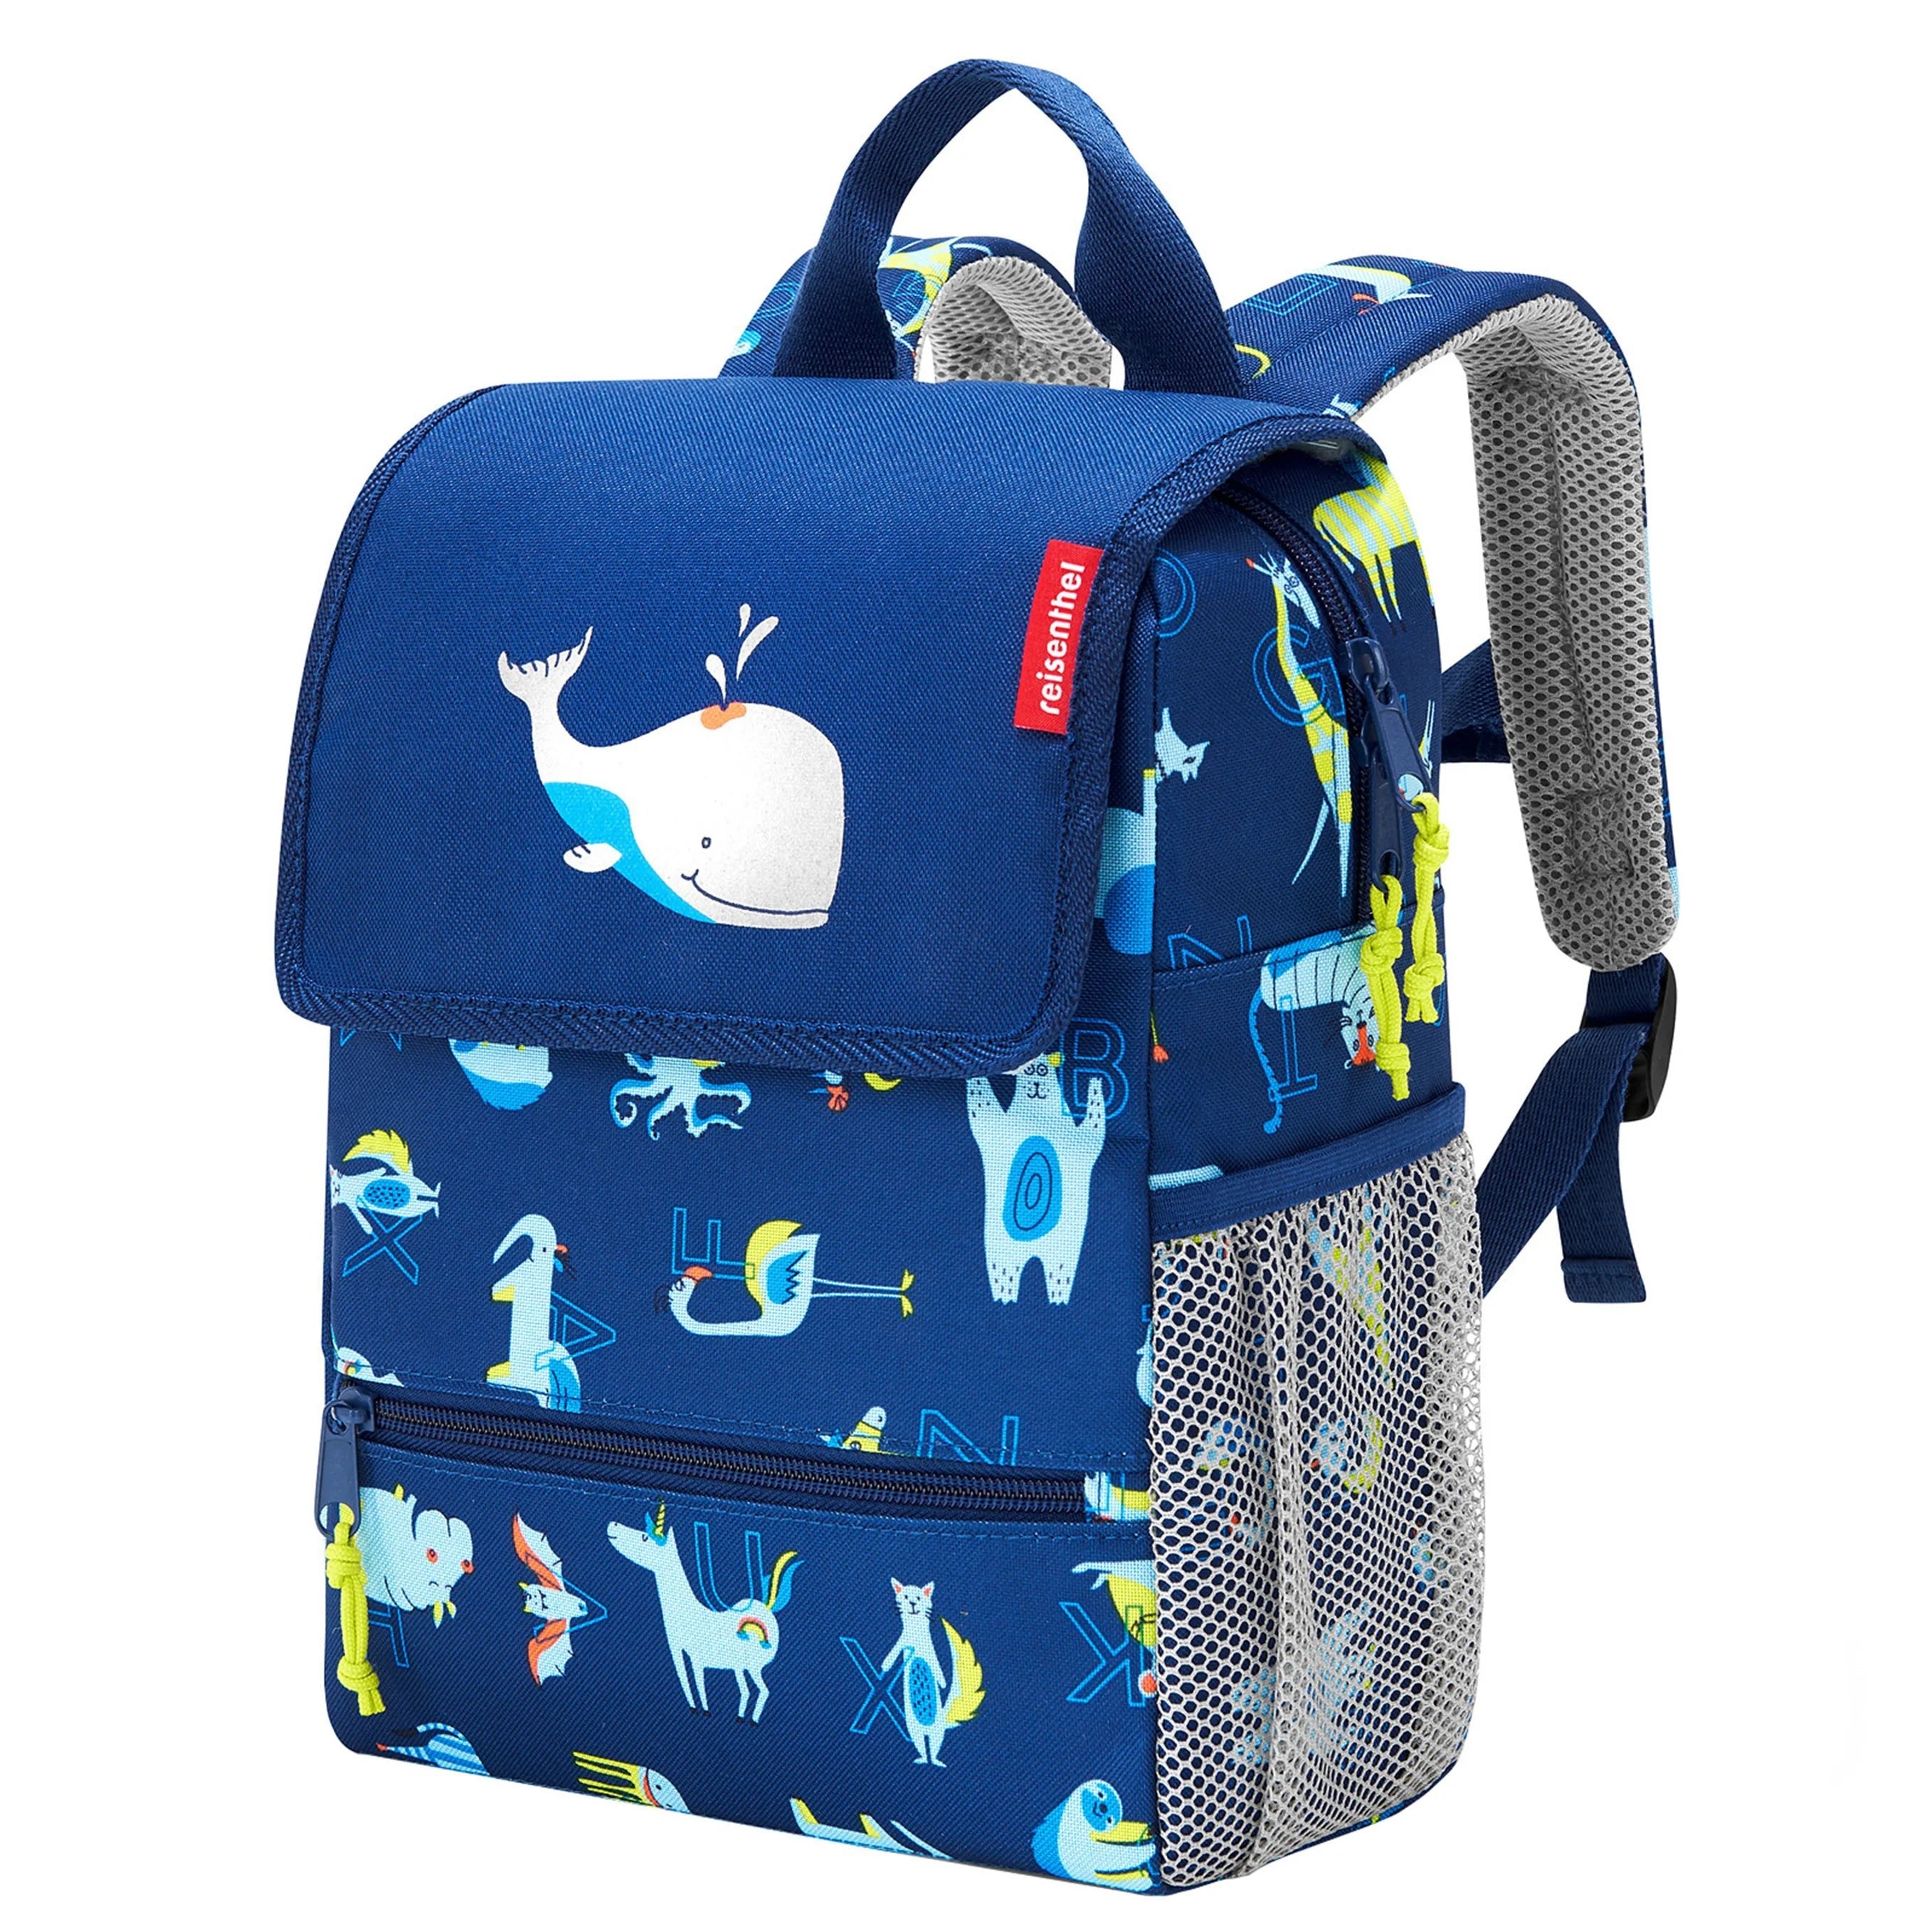 Reisenthel Kids Backpack Backpack 28 cm - friends blue